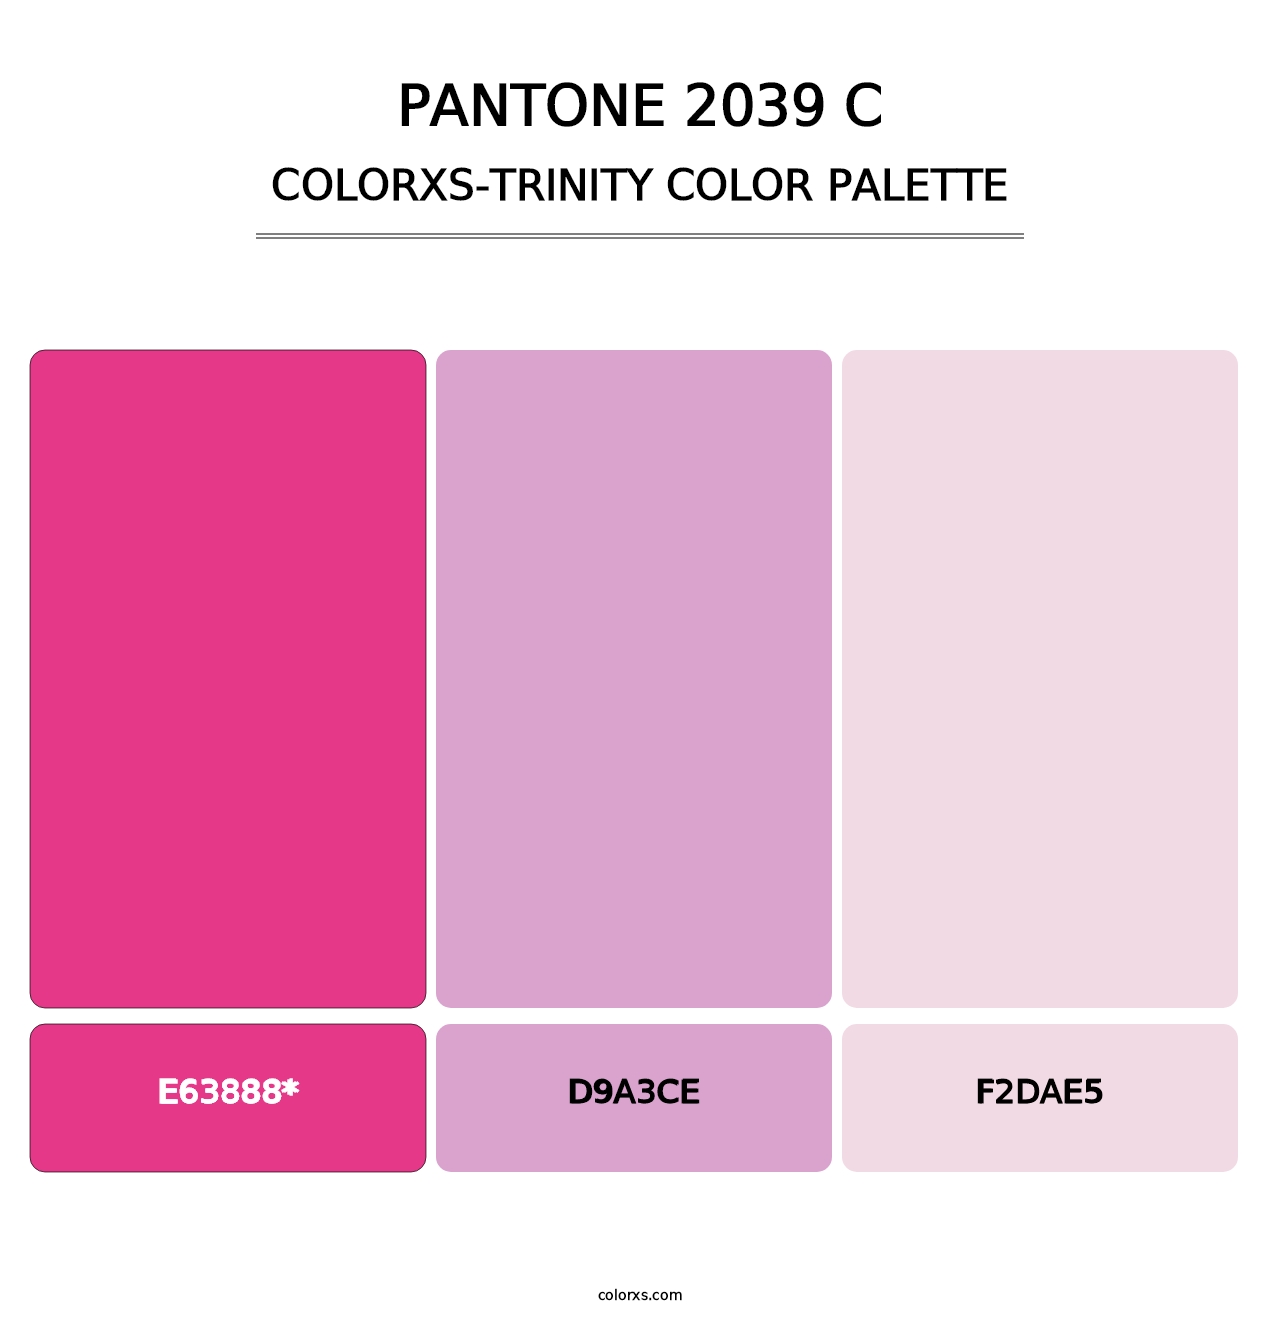 PANTONE 2039 C - Colorxs Trinity Palette